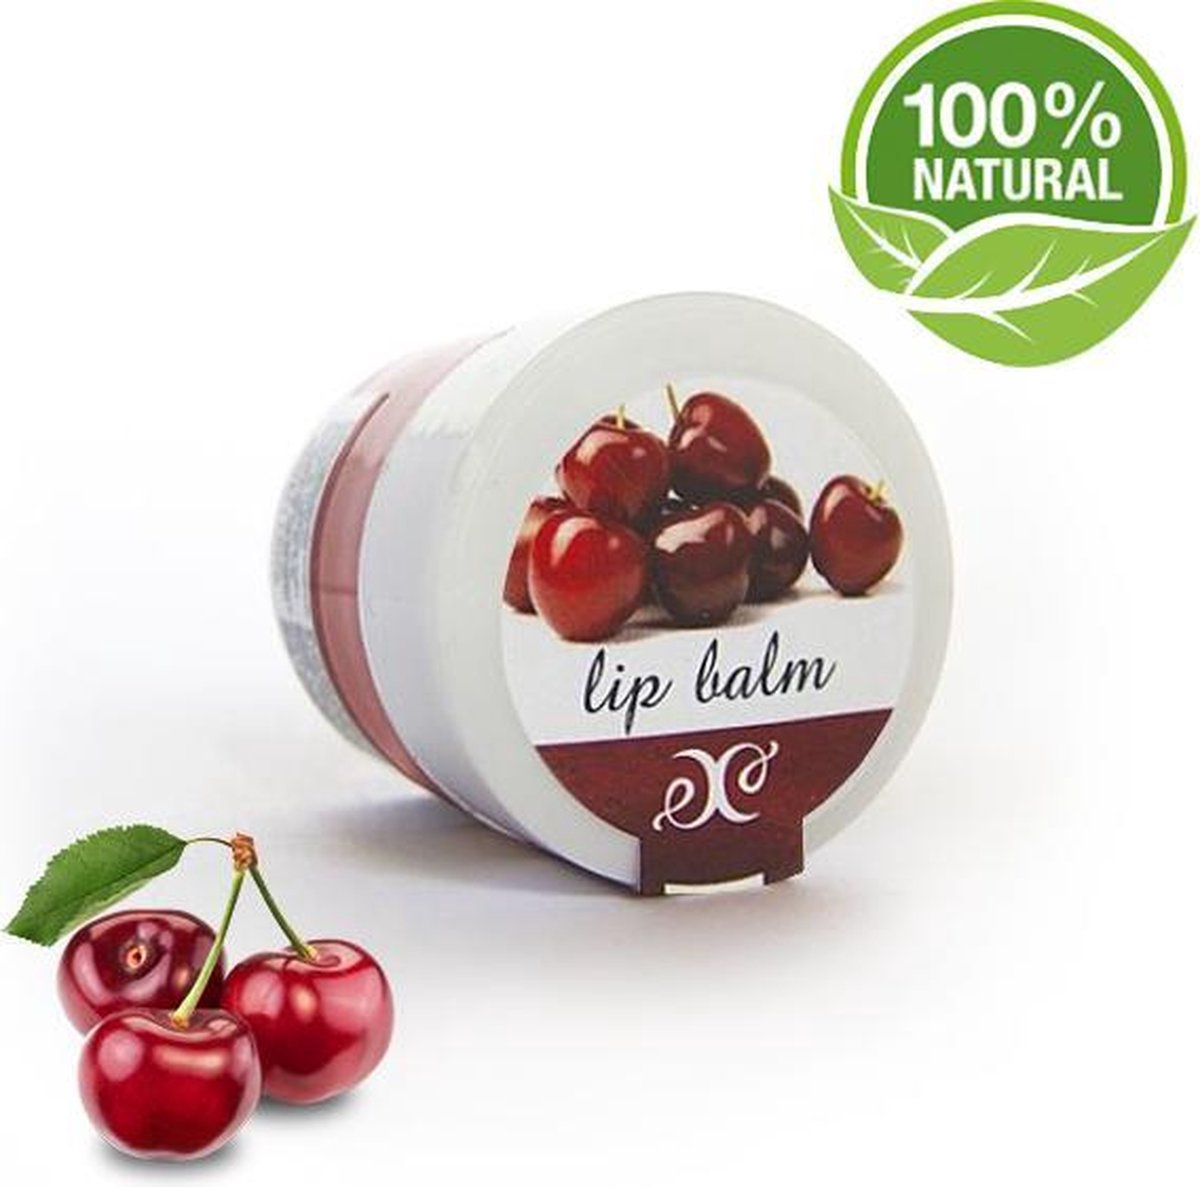 Cherry Lippen Balsem 100% Natural - Hydrateert, Voedt & Verzorgt - 30ml